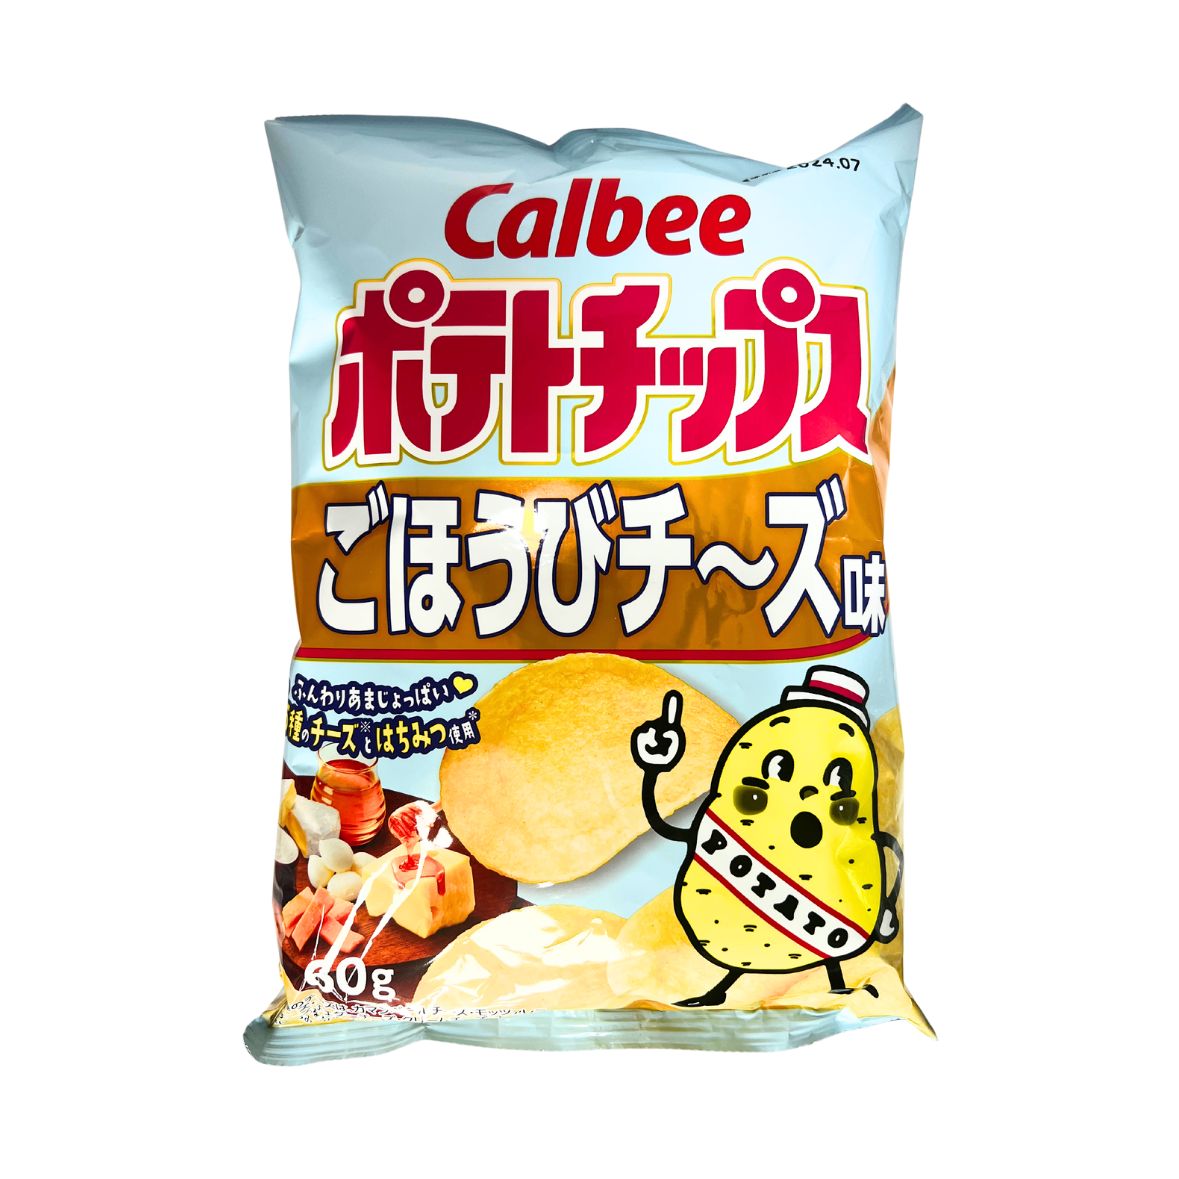 Calbee - Cheese Treat